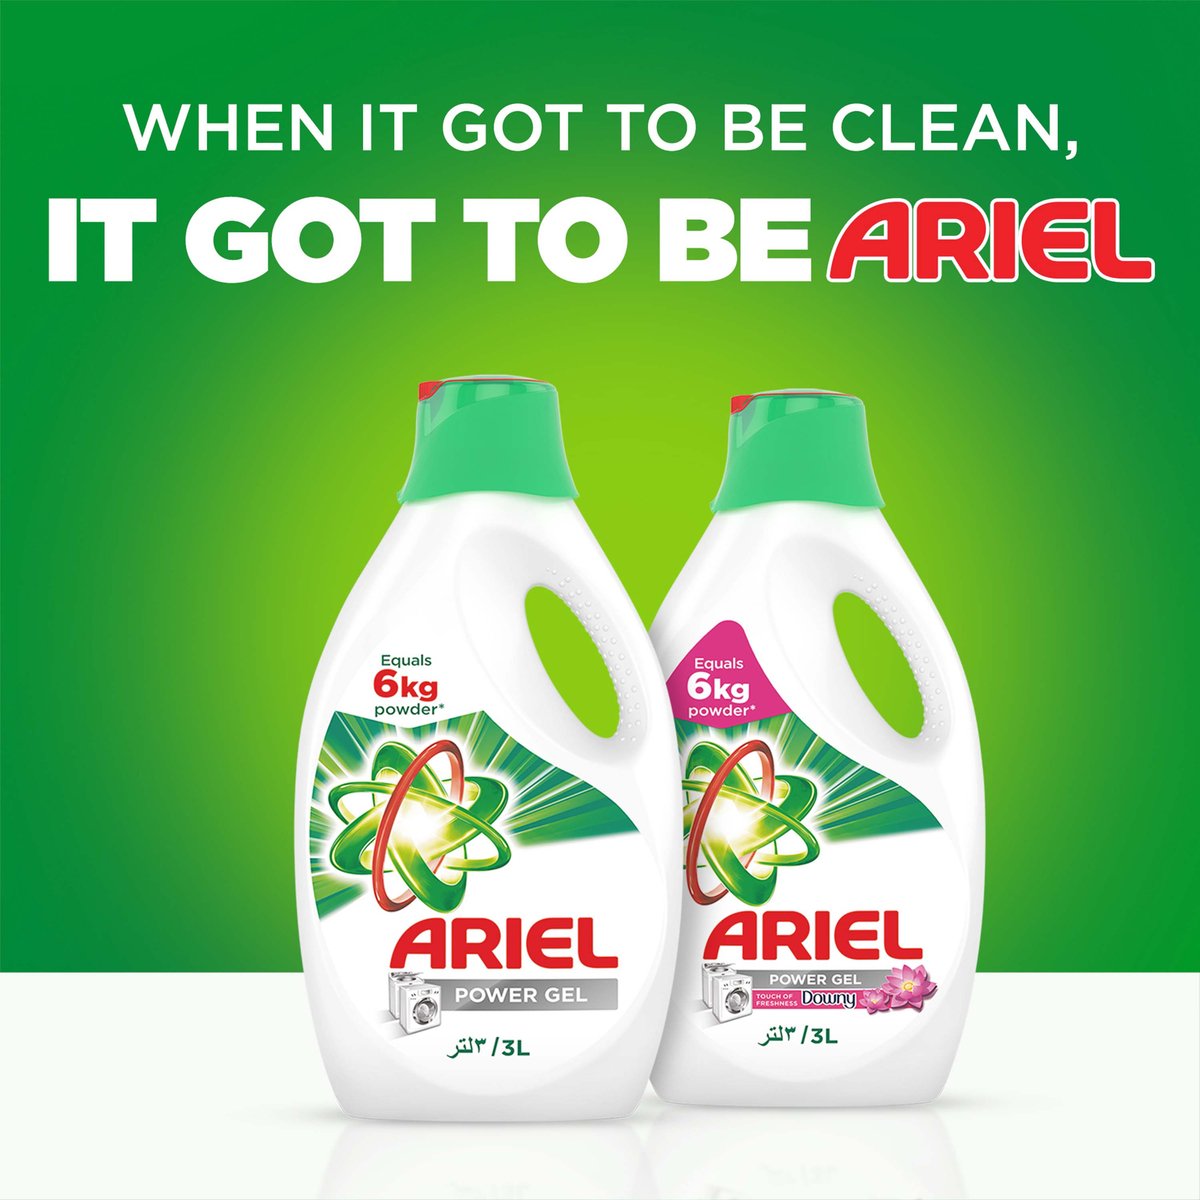 Ariel Power Gel Liquid Detergent Original Scent 1.8Litre